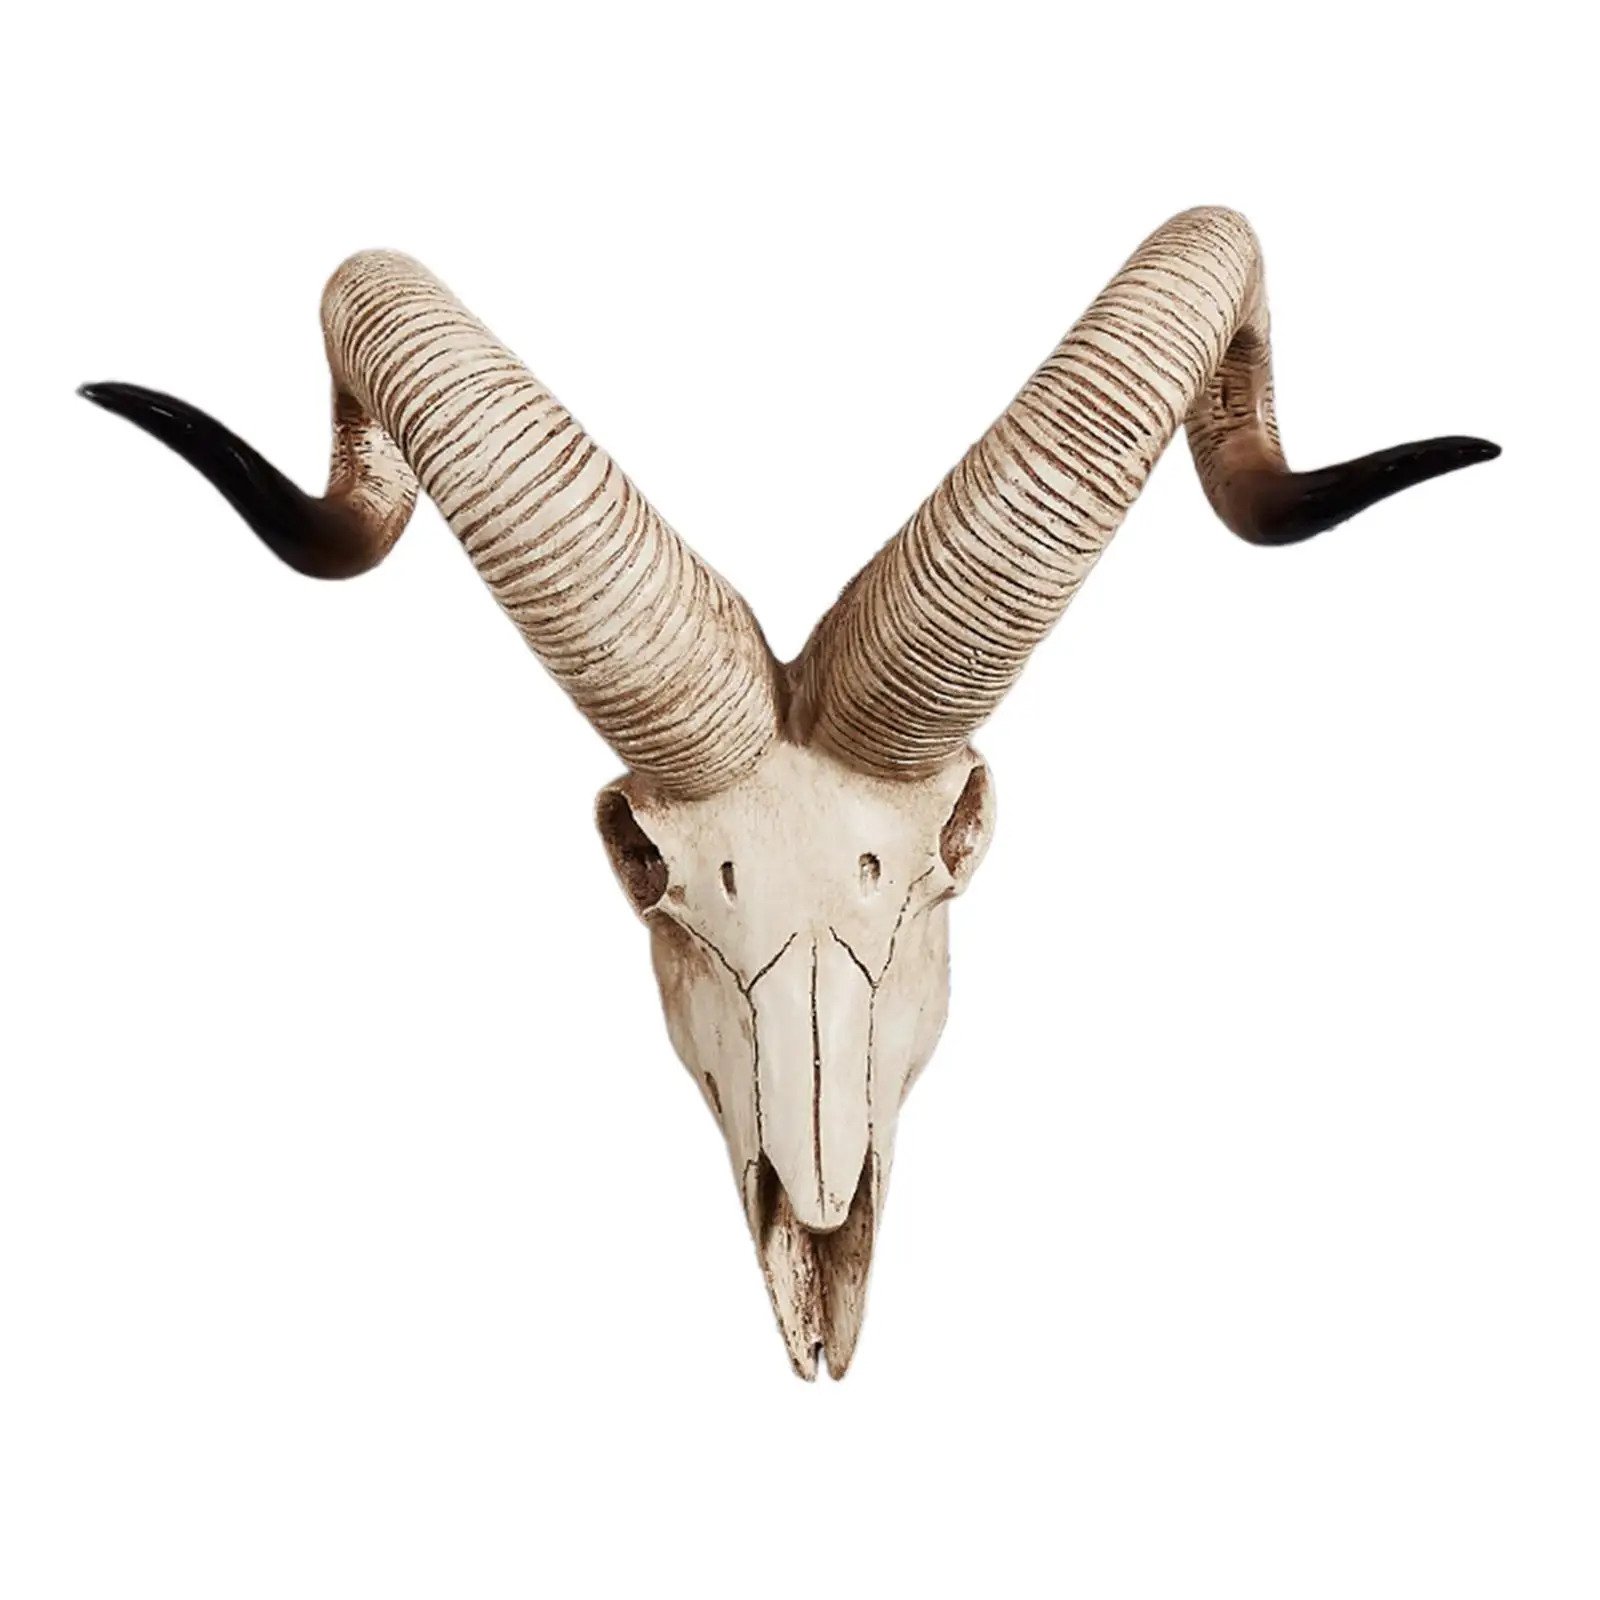 Skull Sheep Head Wall Sculpture Wall Sculpture Animal Sculpture Halloween Decoration 3D Long Horned RAM Decor Skull for Bedroom